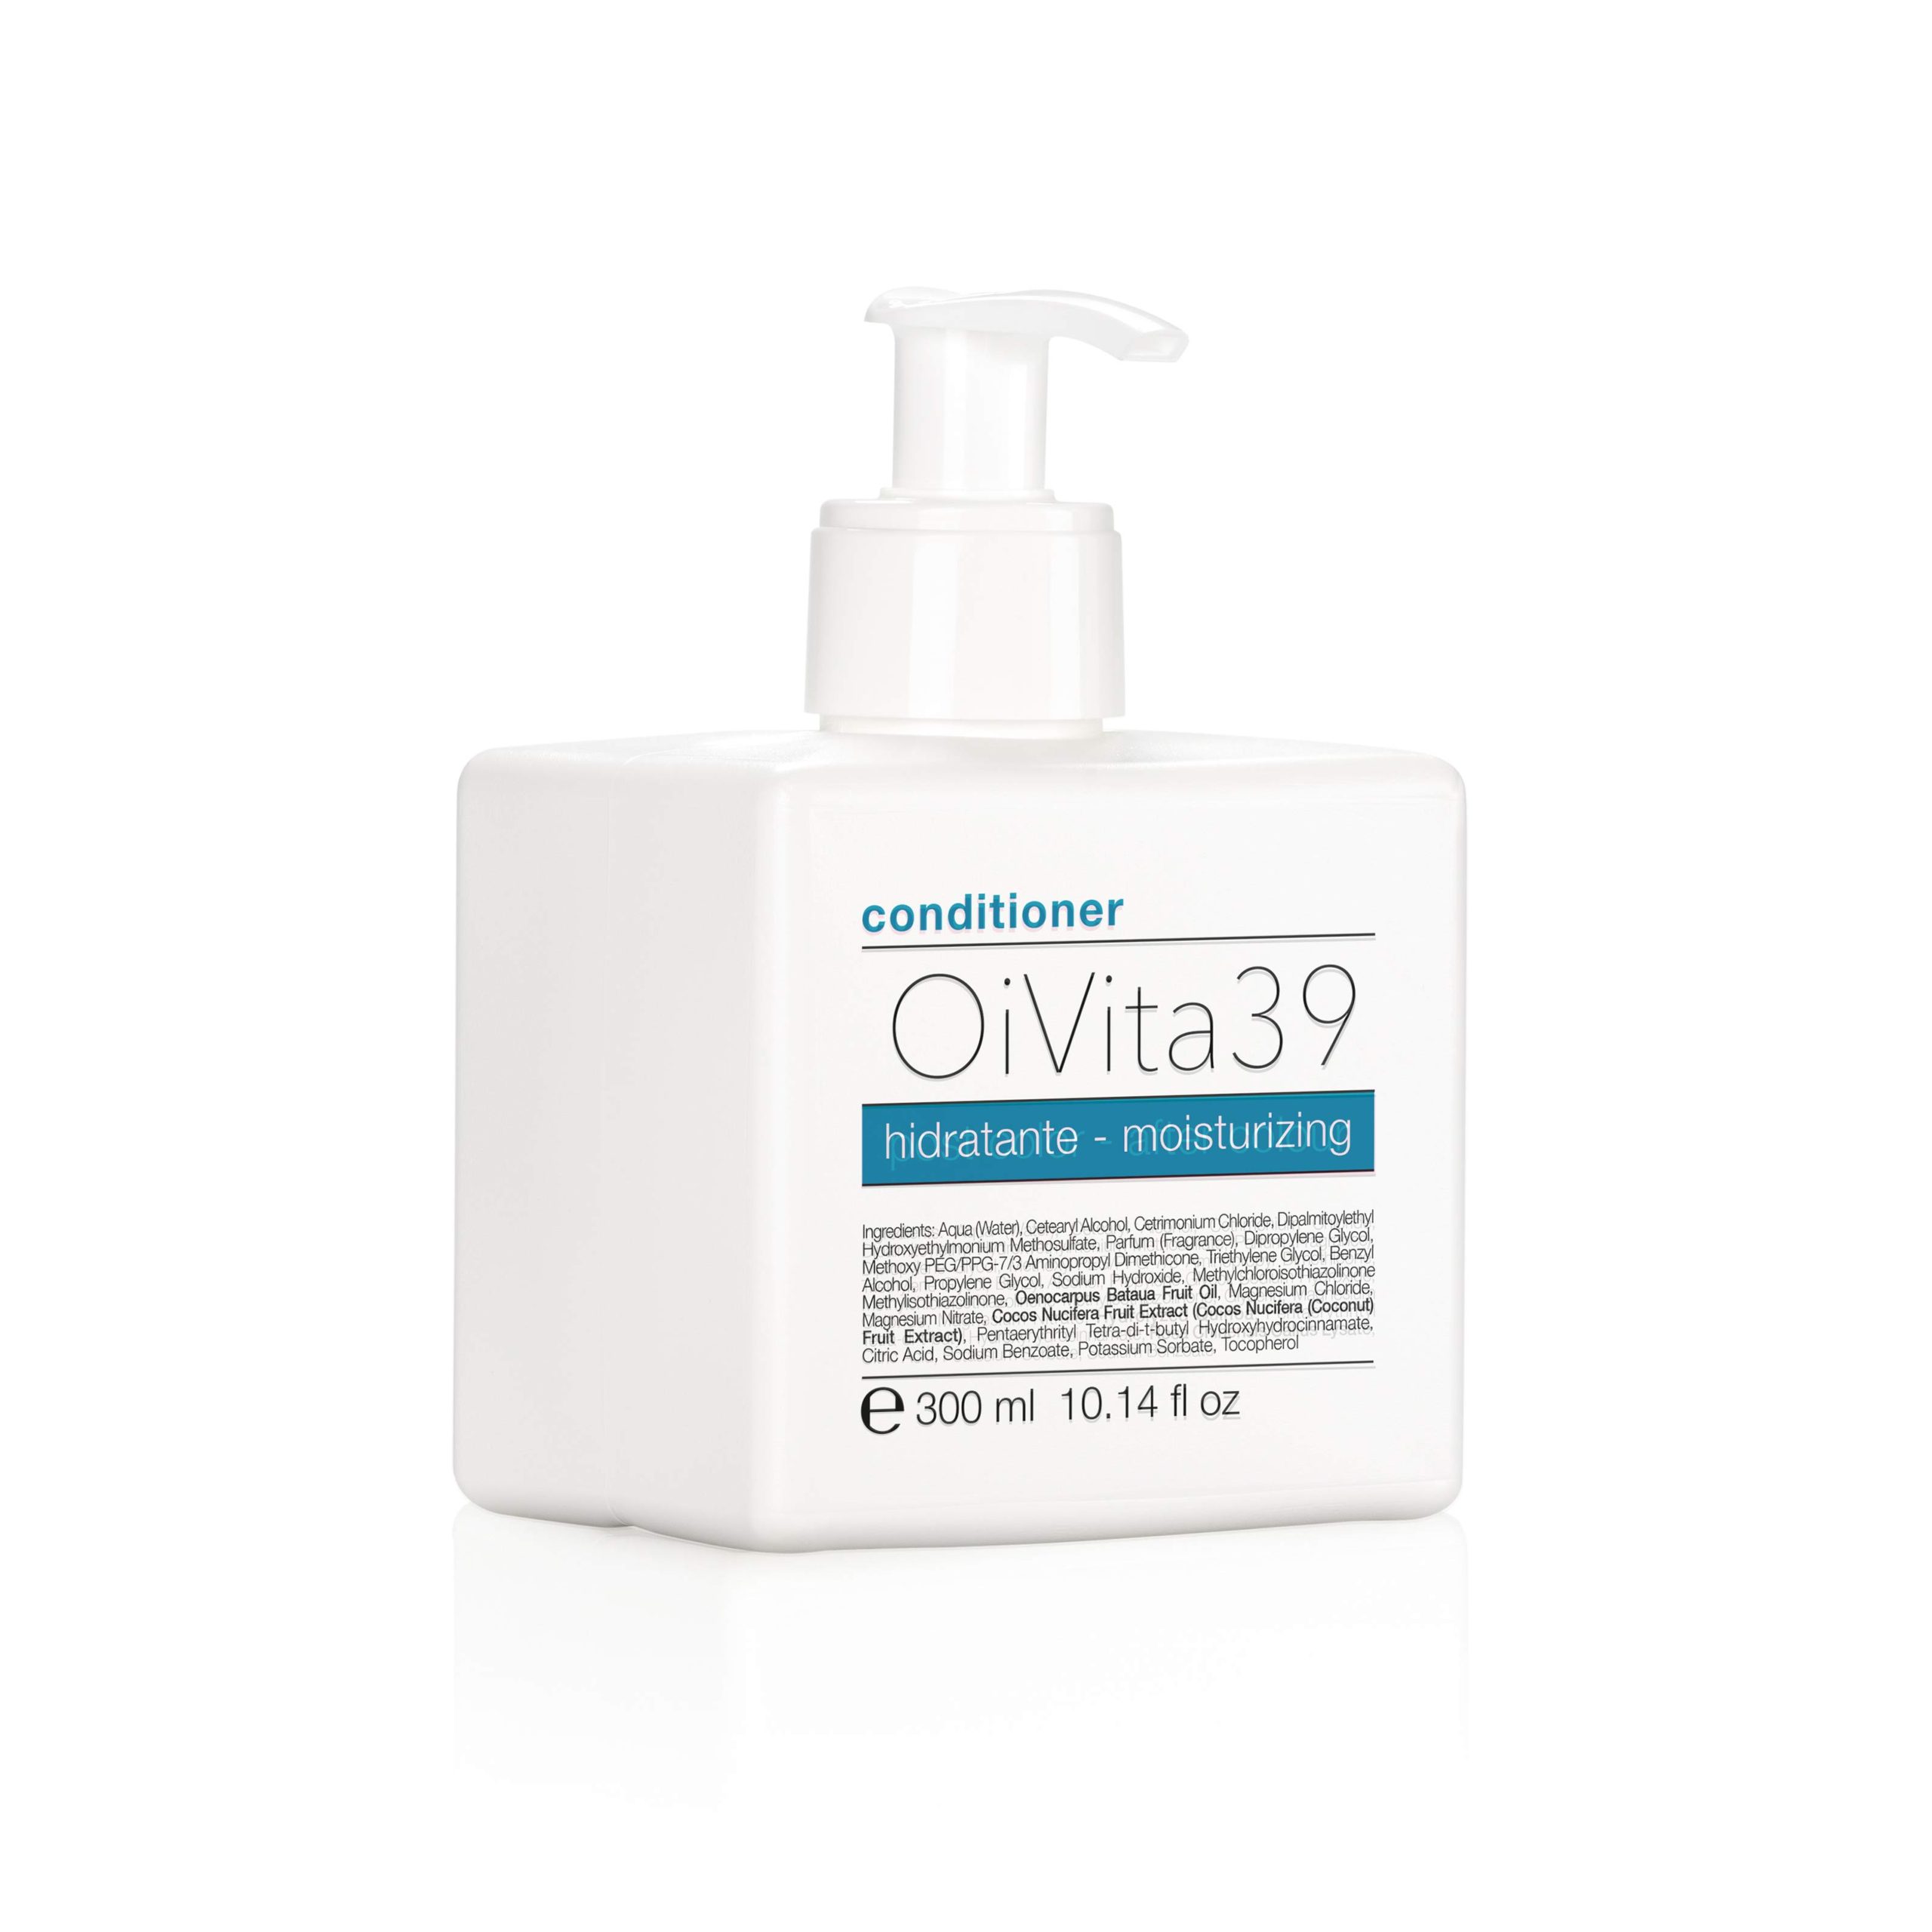 conditioner-moisturizing-300ml-oivita39-www.oivita39.com